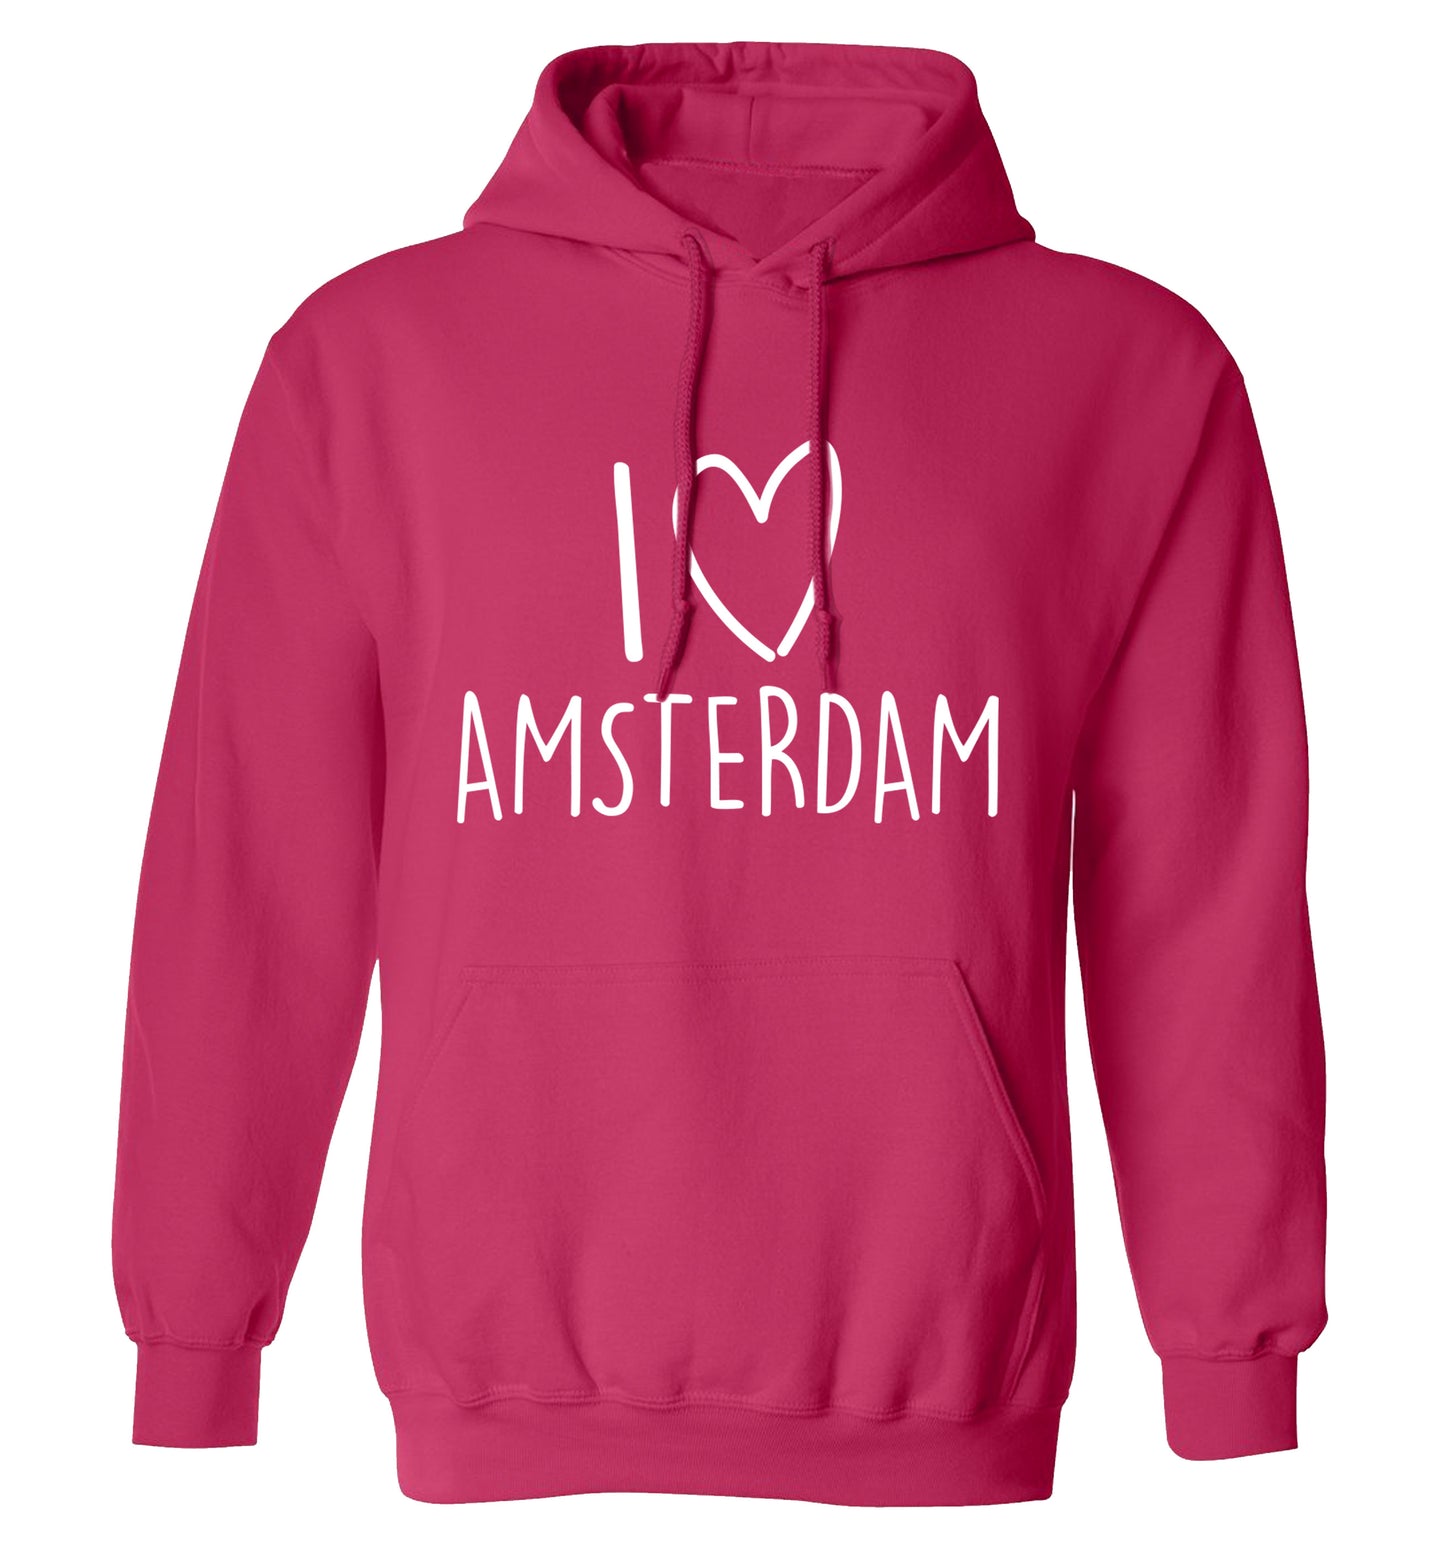 I love Amsterdam adults unisex pink hoodie 2XL